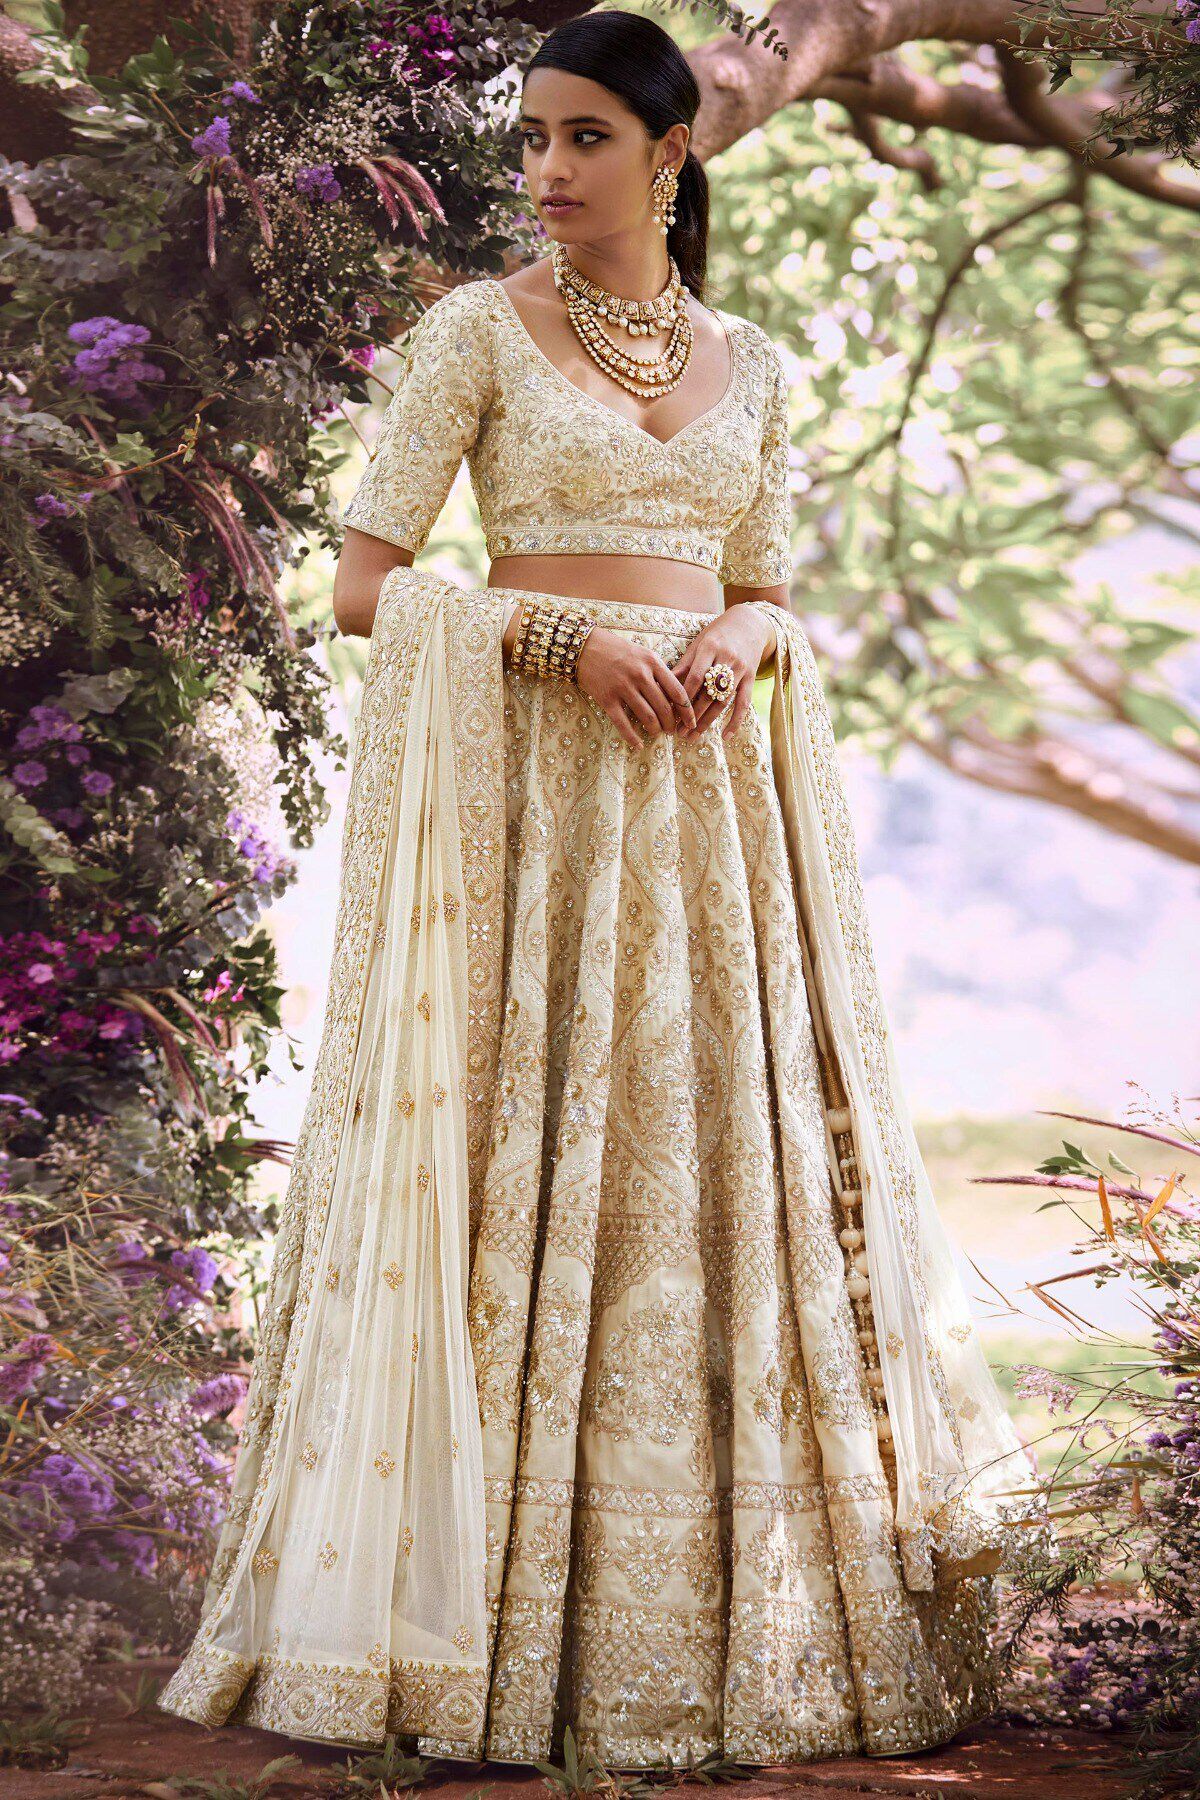 Gorgeous Anita Dongre Ready-To-Wear Lehengas Under 2 Lakh! | WedMeGood